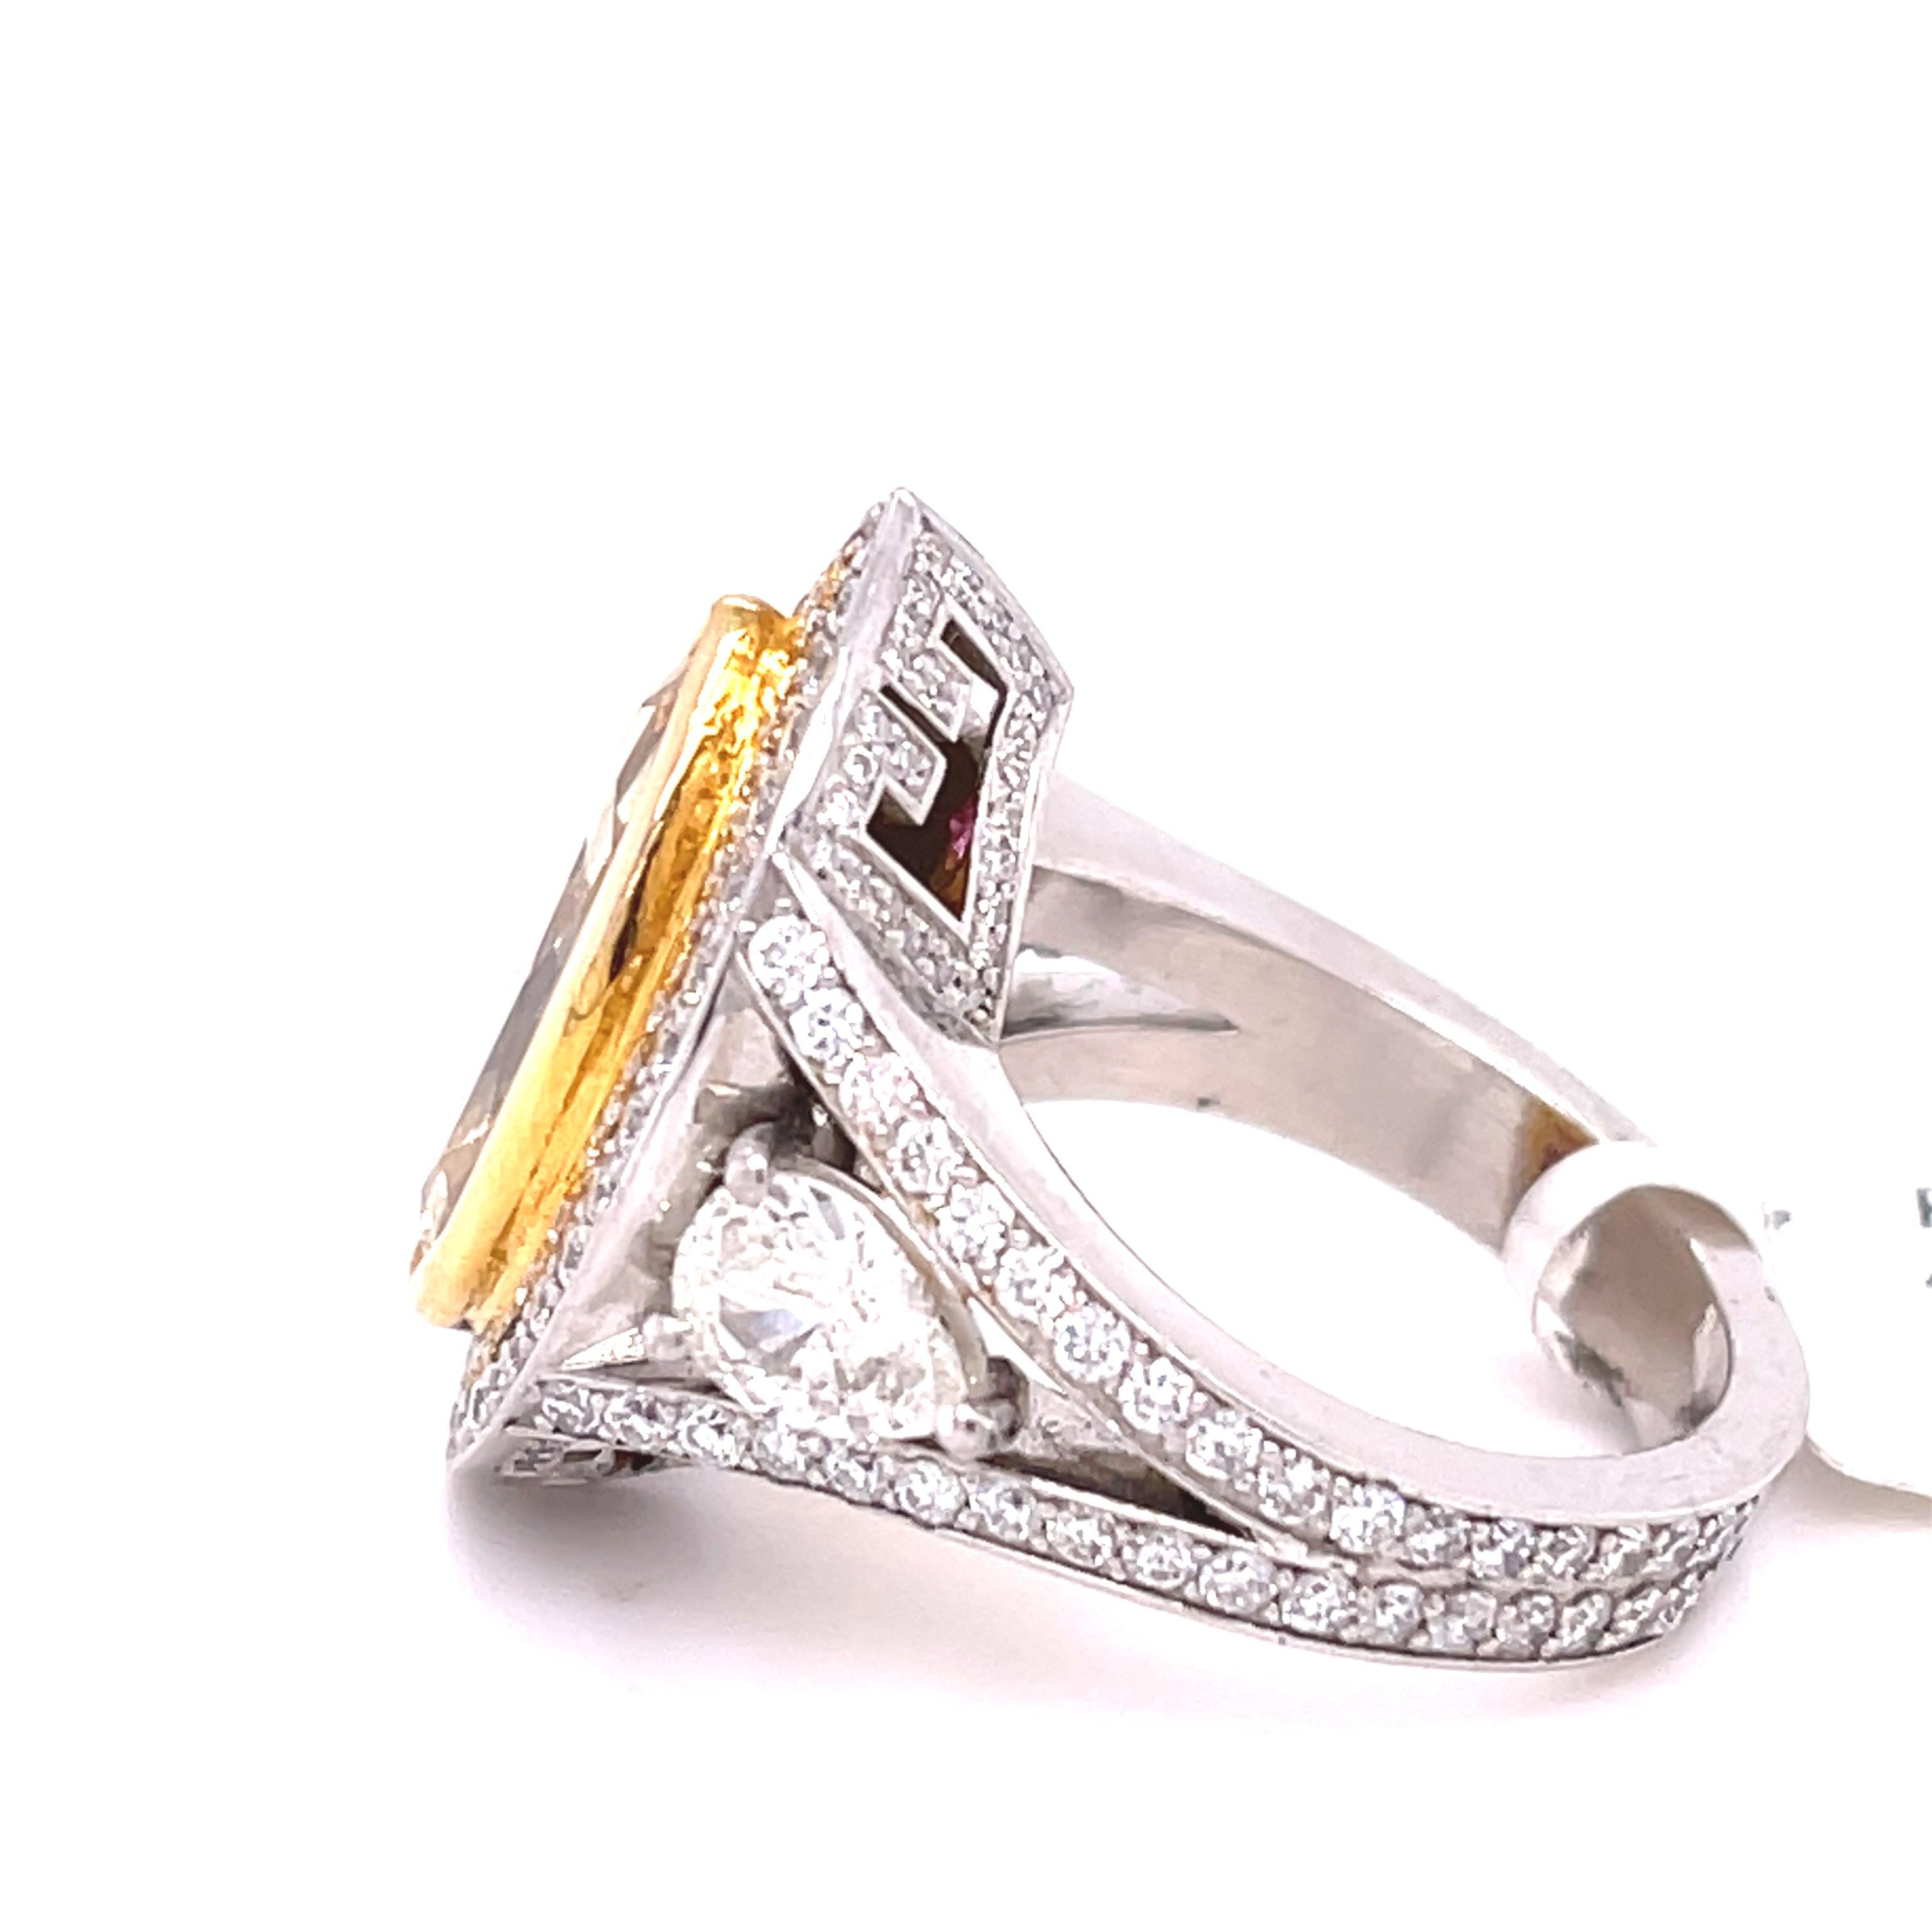 Marquise Cut 4.20 Carat Canary Diamond Ring